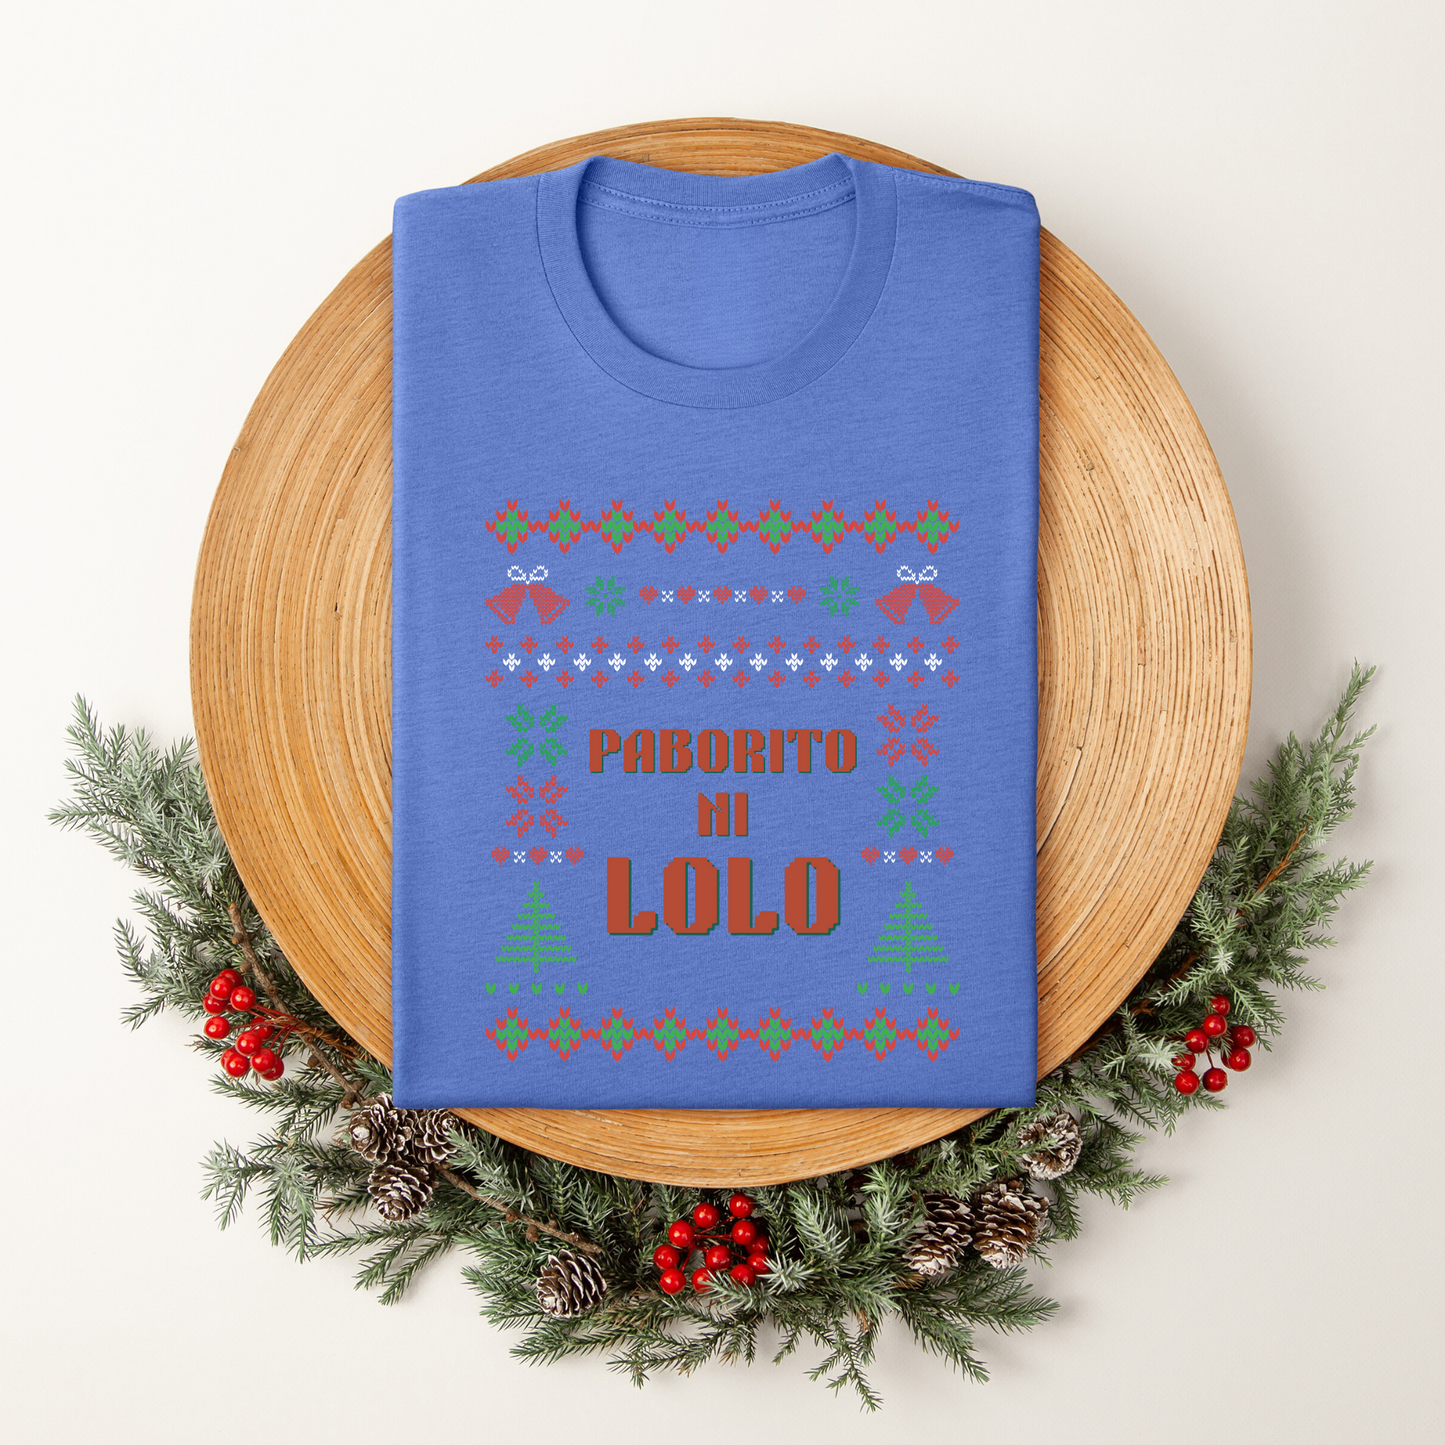 Paborito Ni Lolo Filipino Thanksgiving Christmas T-Shirt Toddler - Heather Columbia Blue in Christmas setting